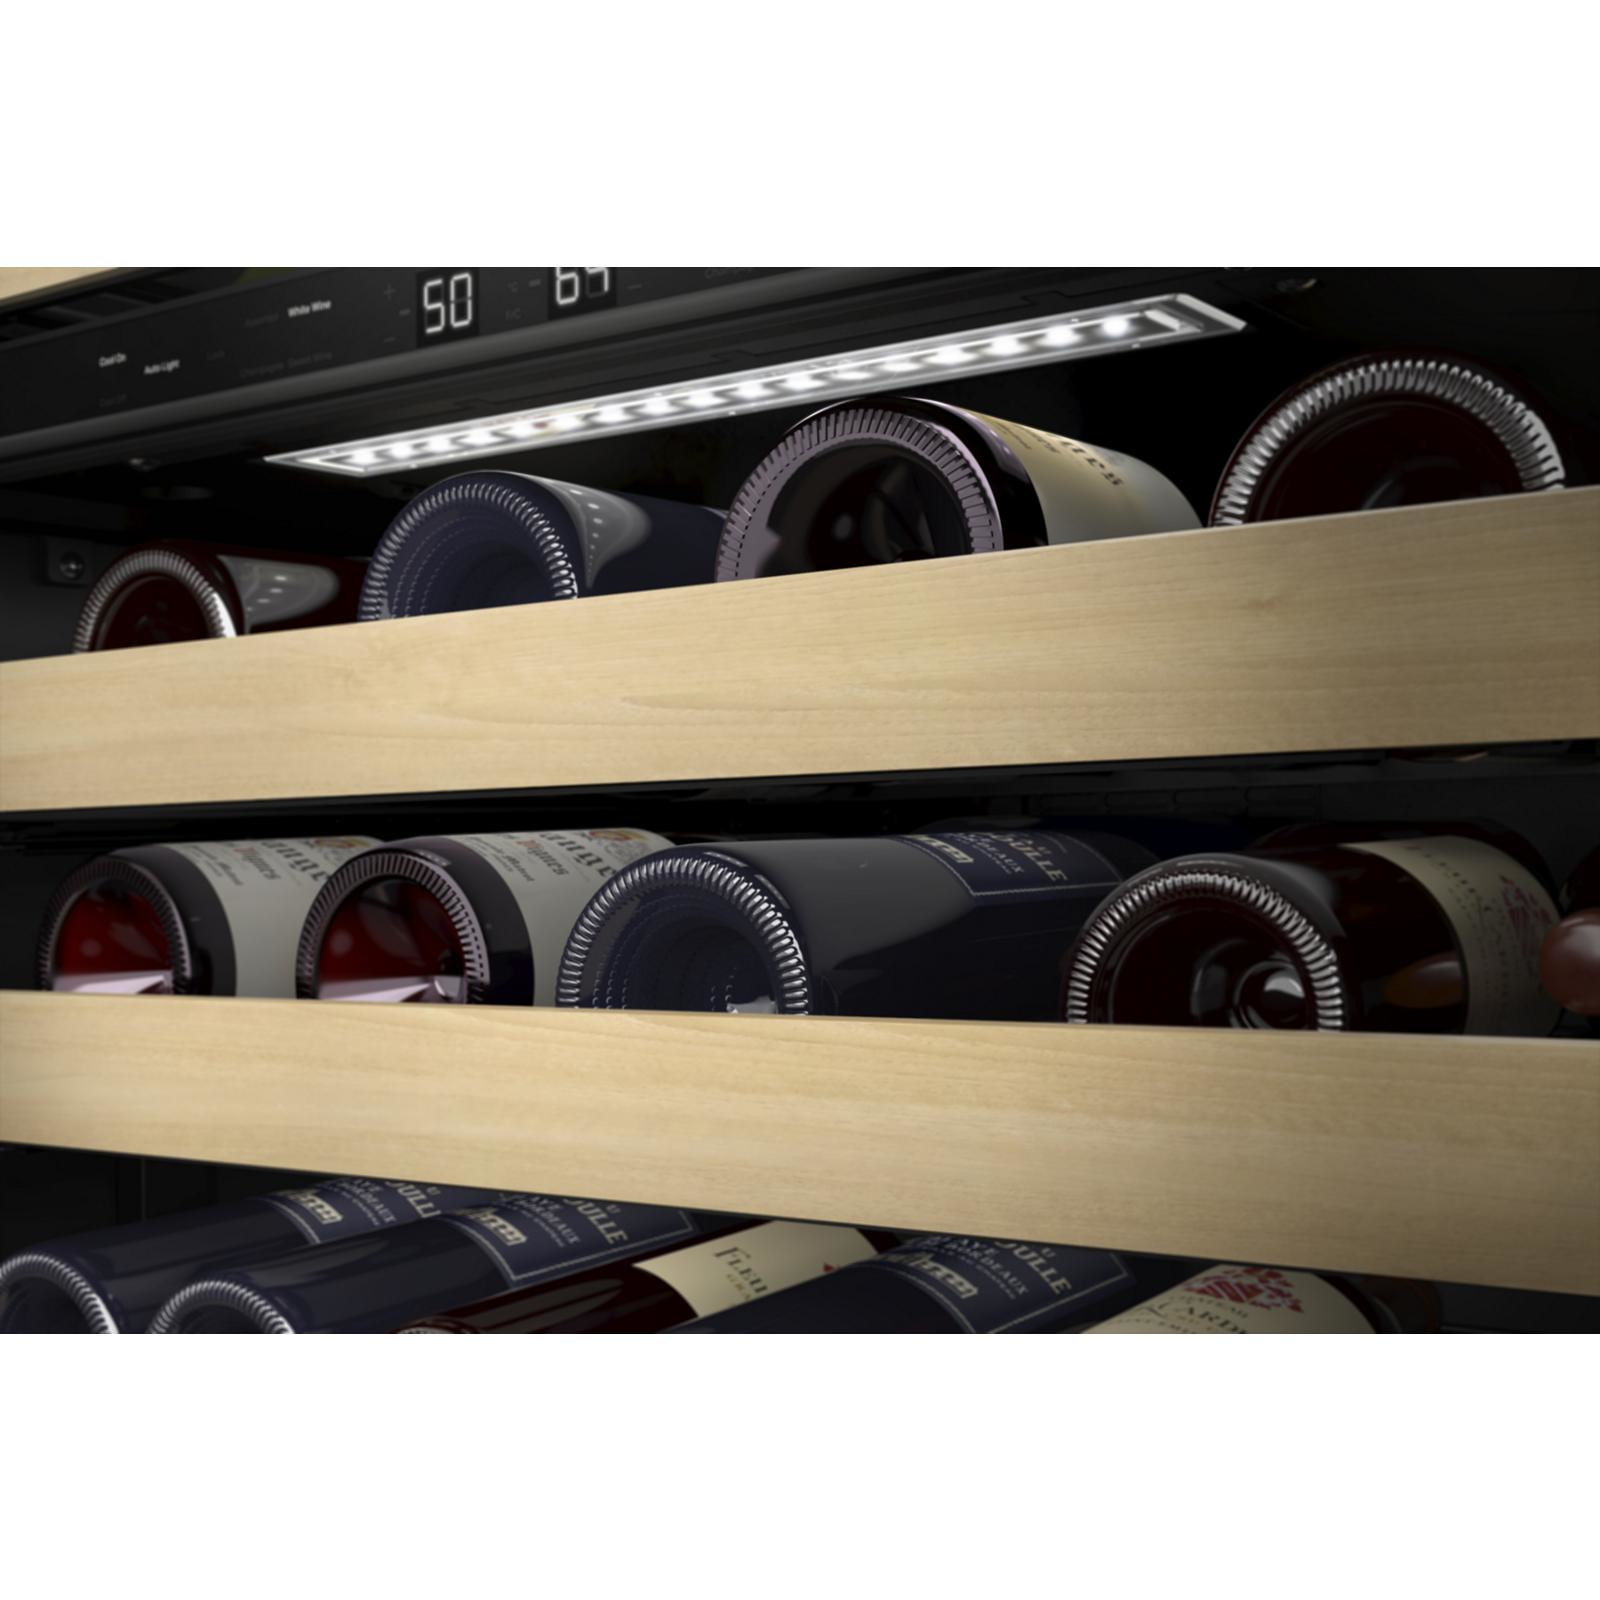 KitchenAid - 23.875 Inch 4.97 cu. ft Undercounter Wine Fridge Refrigerator in Stainless - KUWR214KSB